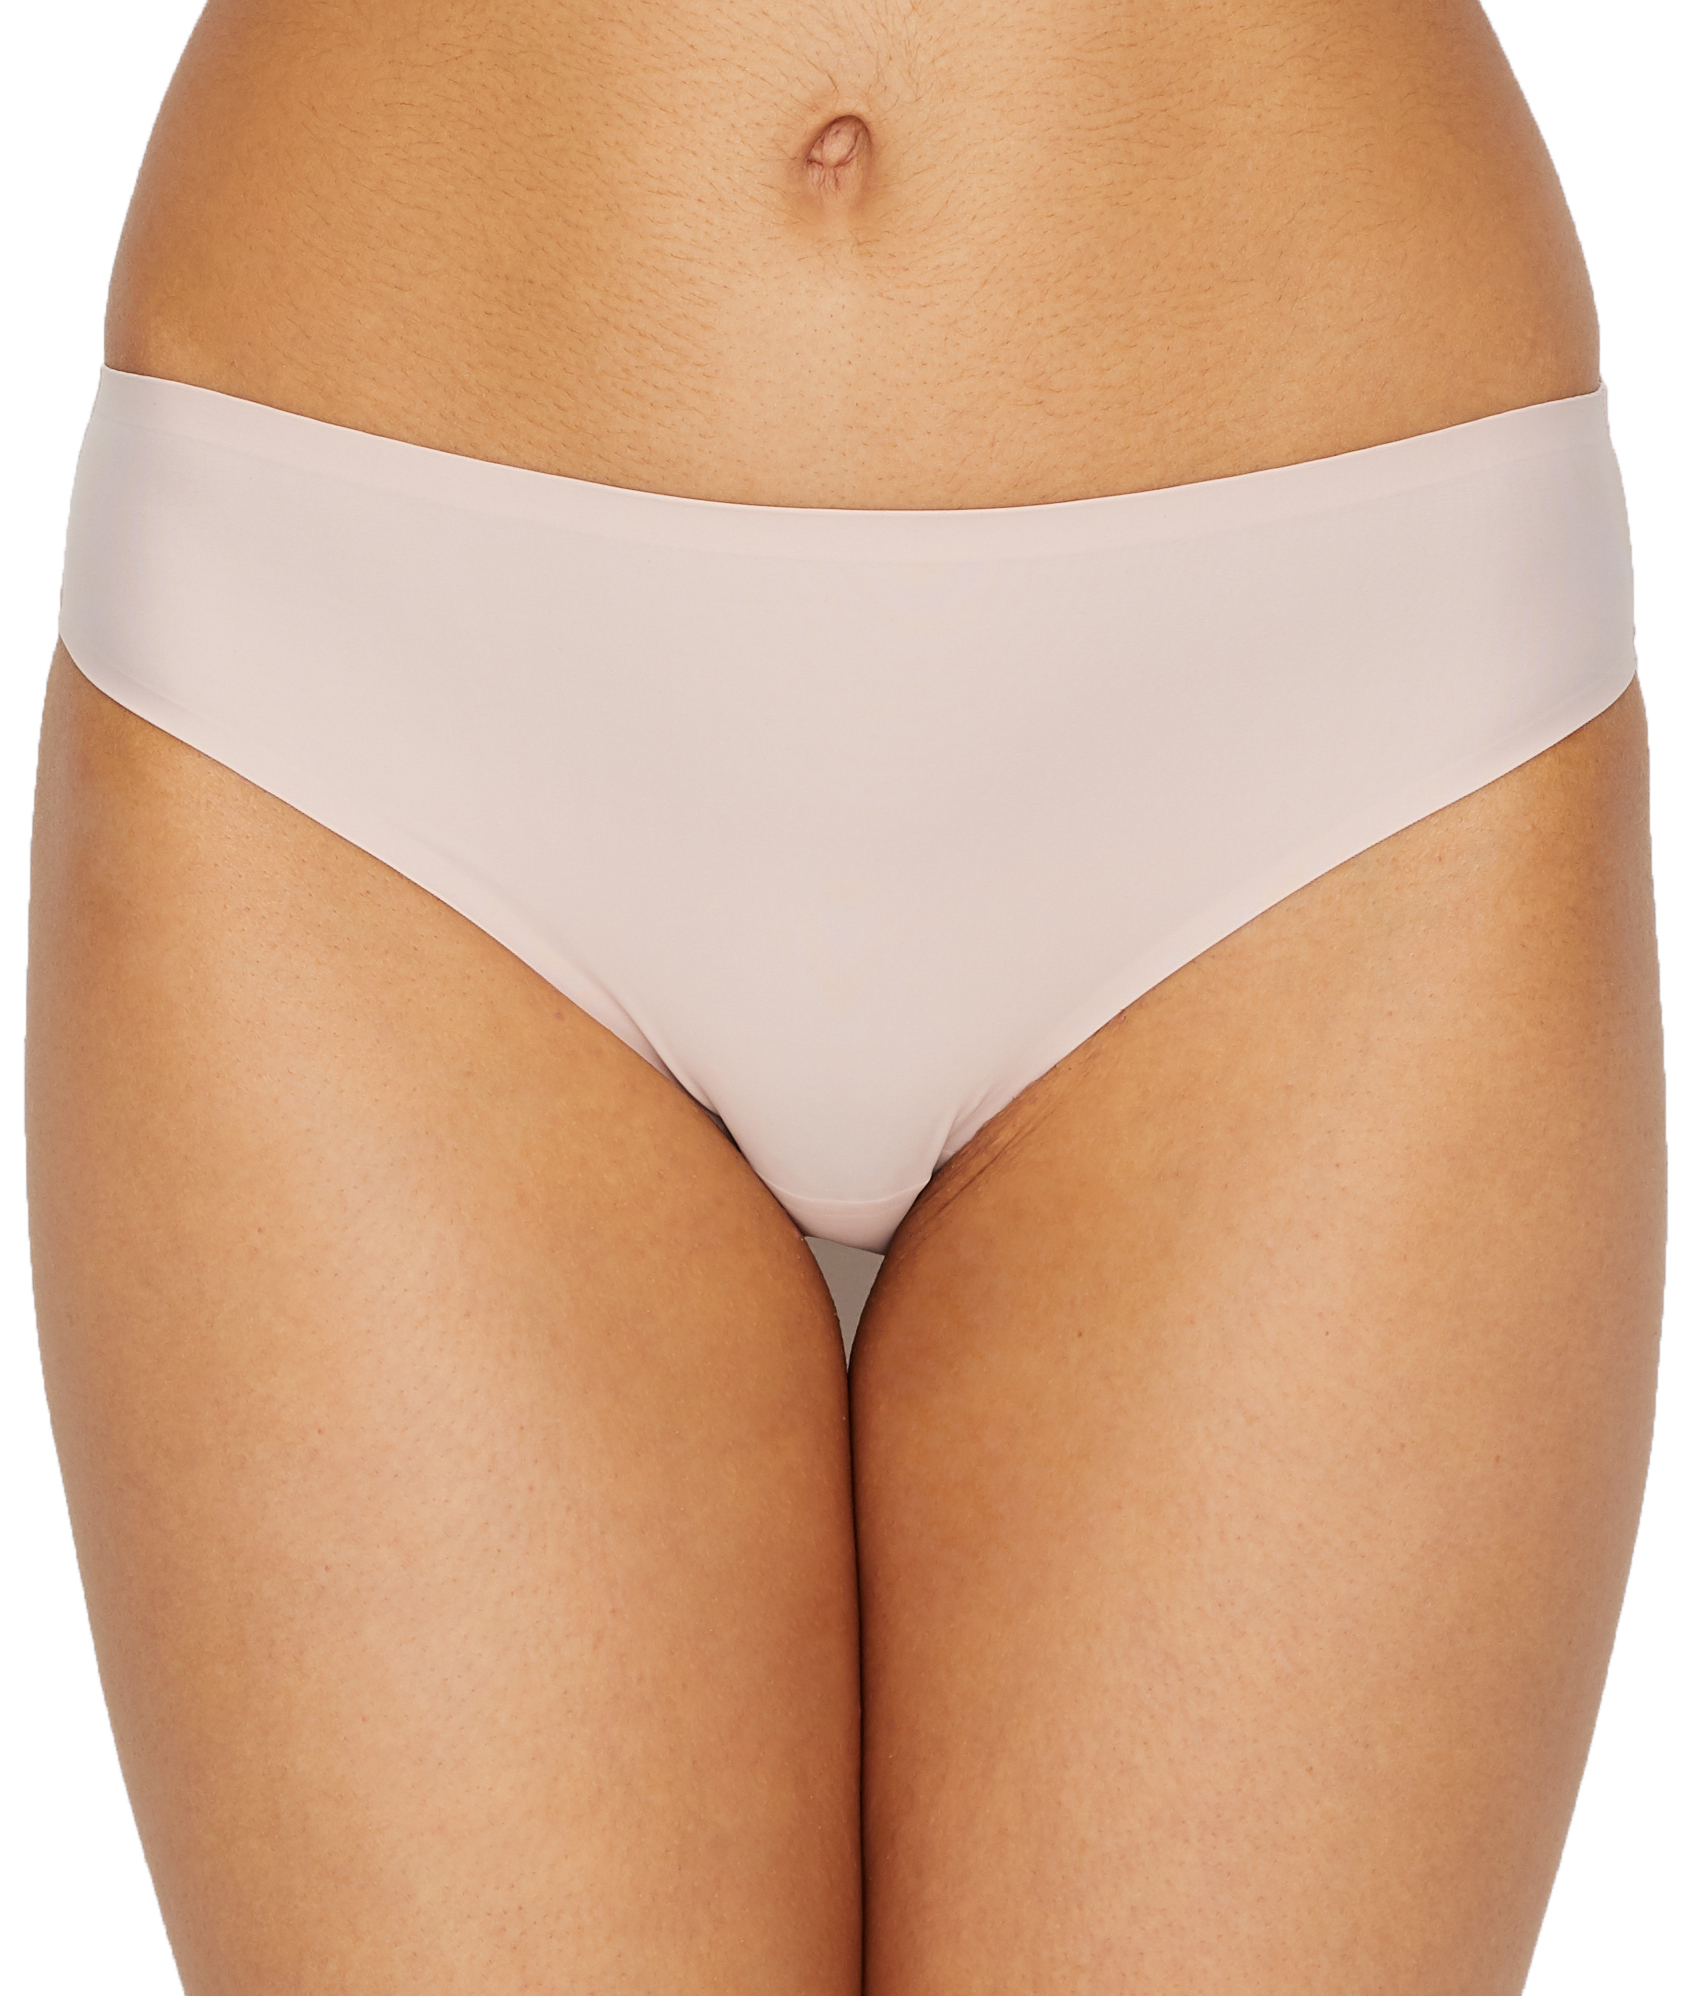 Womens Underwear Microfiber Silicone Edge Hipster Panties XS-3X Plus Size